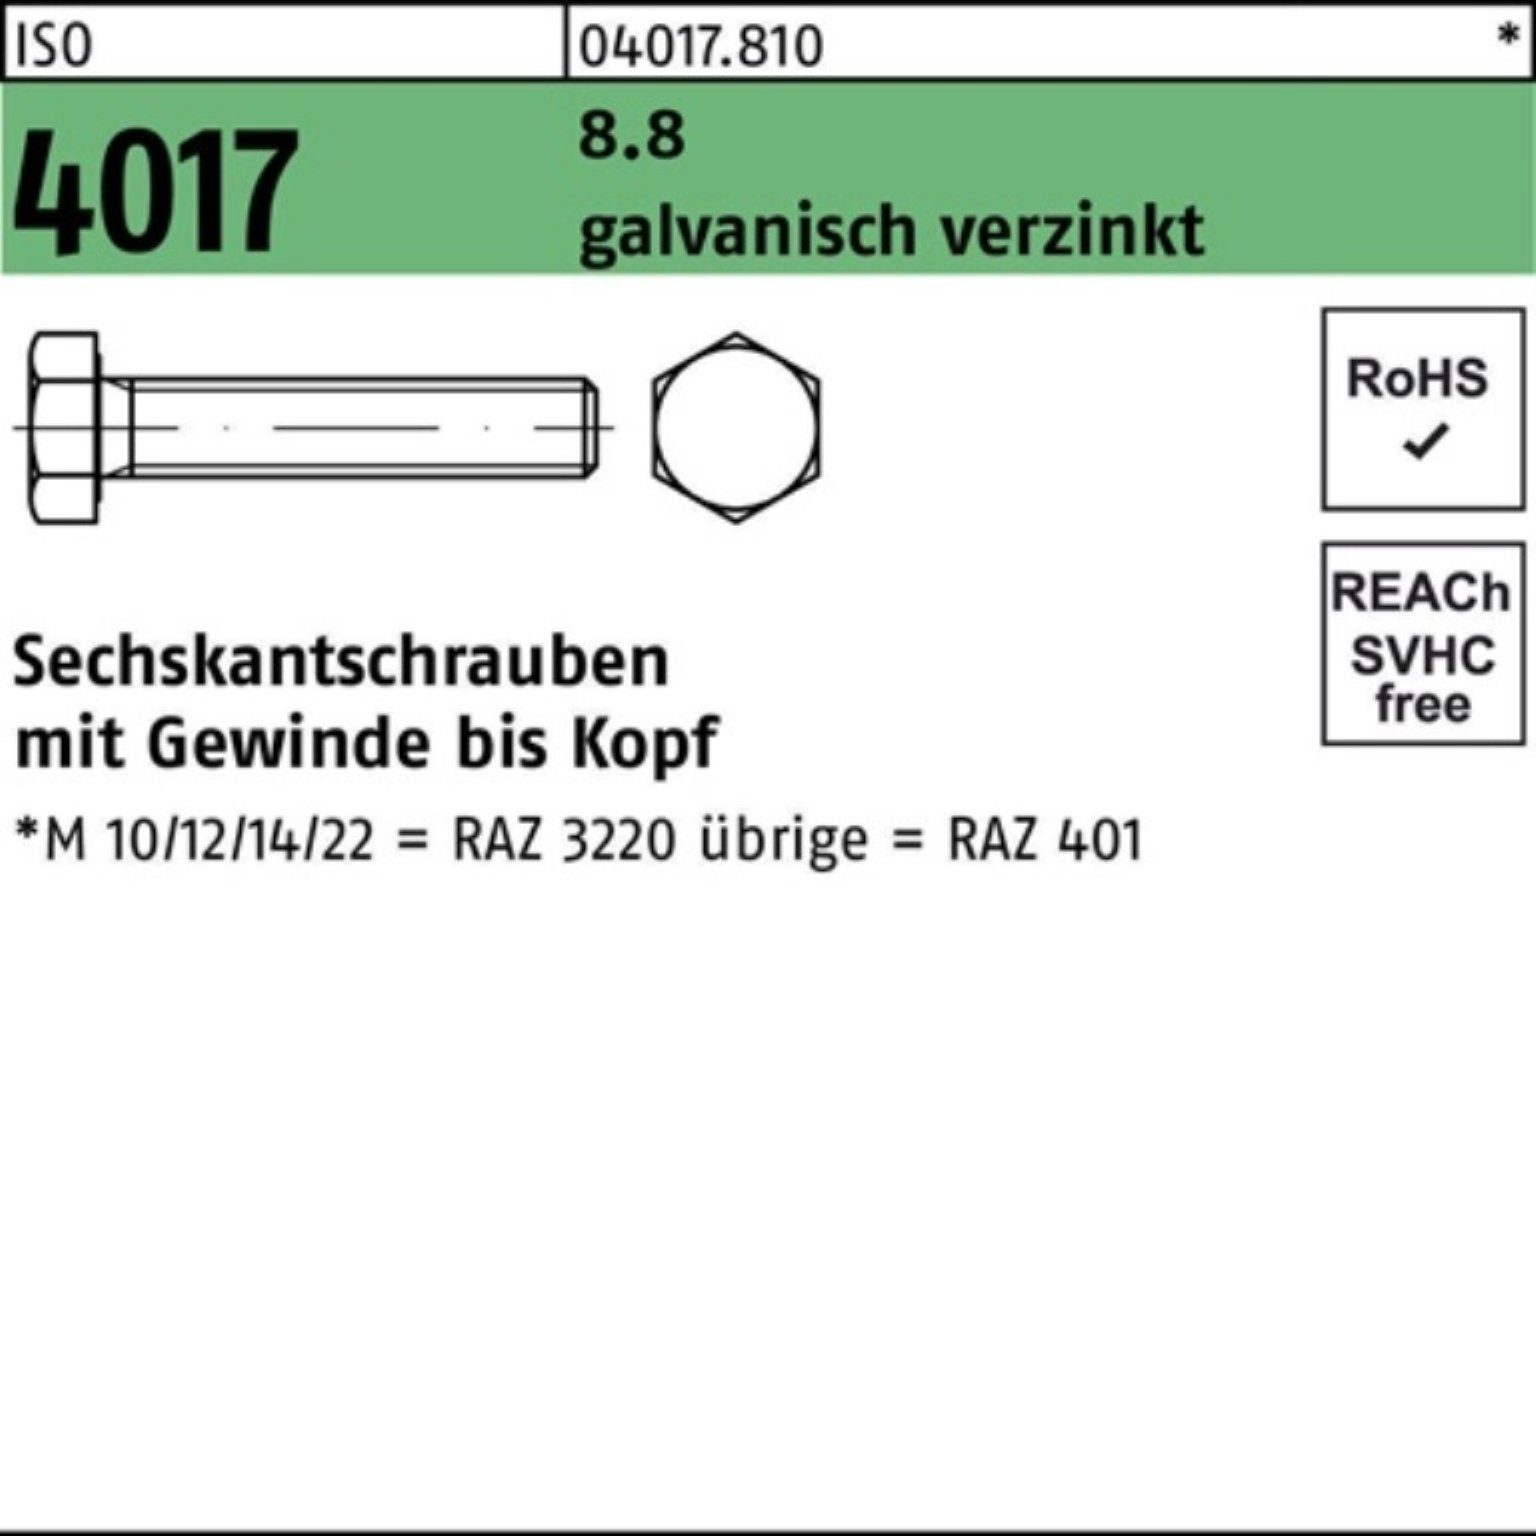 Bufab Sechskantschraube 100er M24x St Pack VG ISO 160 Sechskantschraube 4017 1 8.8 galv.verz